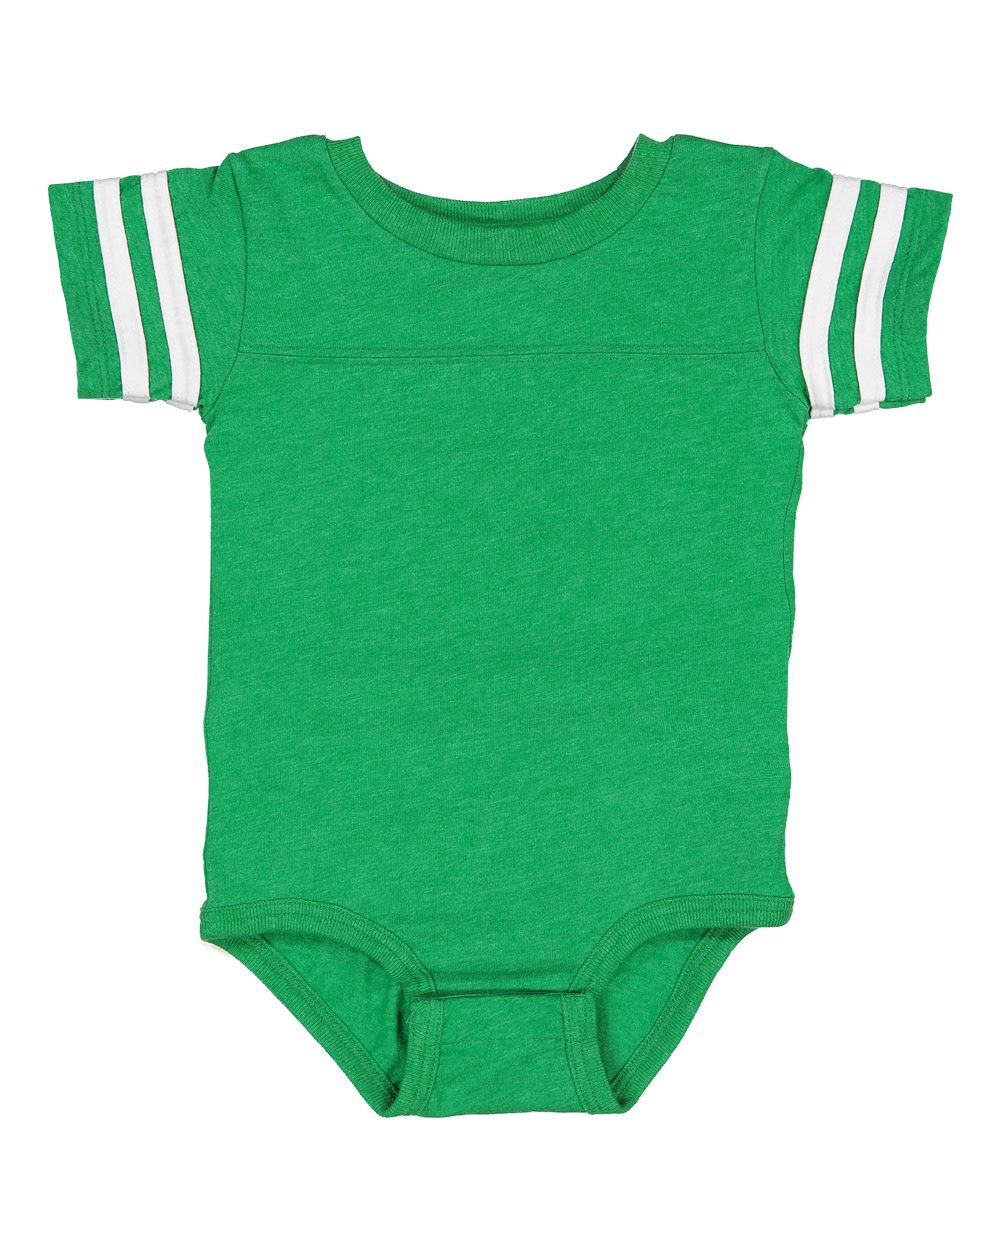 rabbit skins infant football jersey bodysuit vintage green white